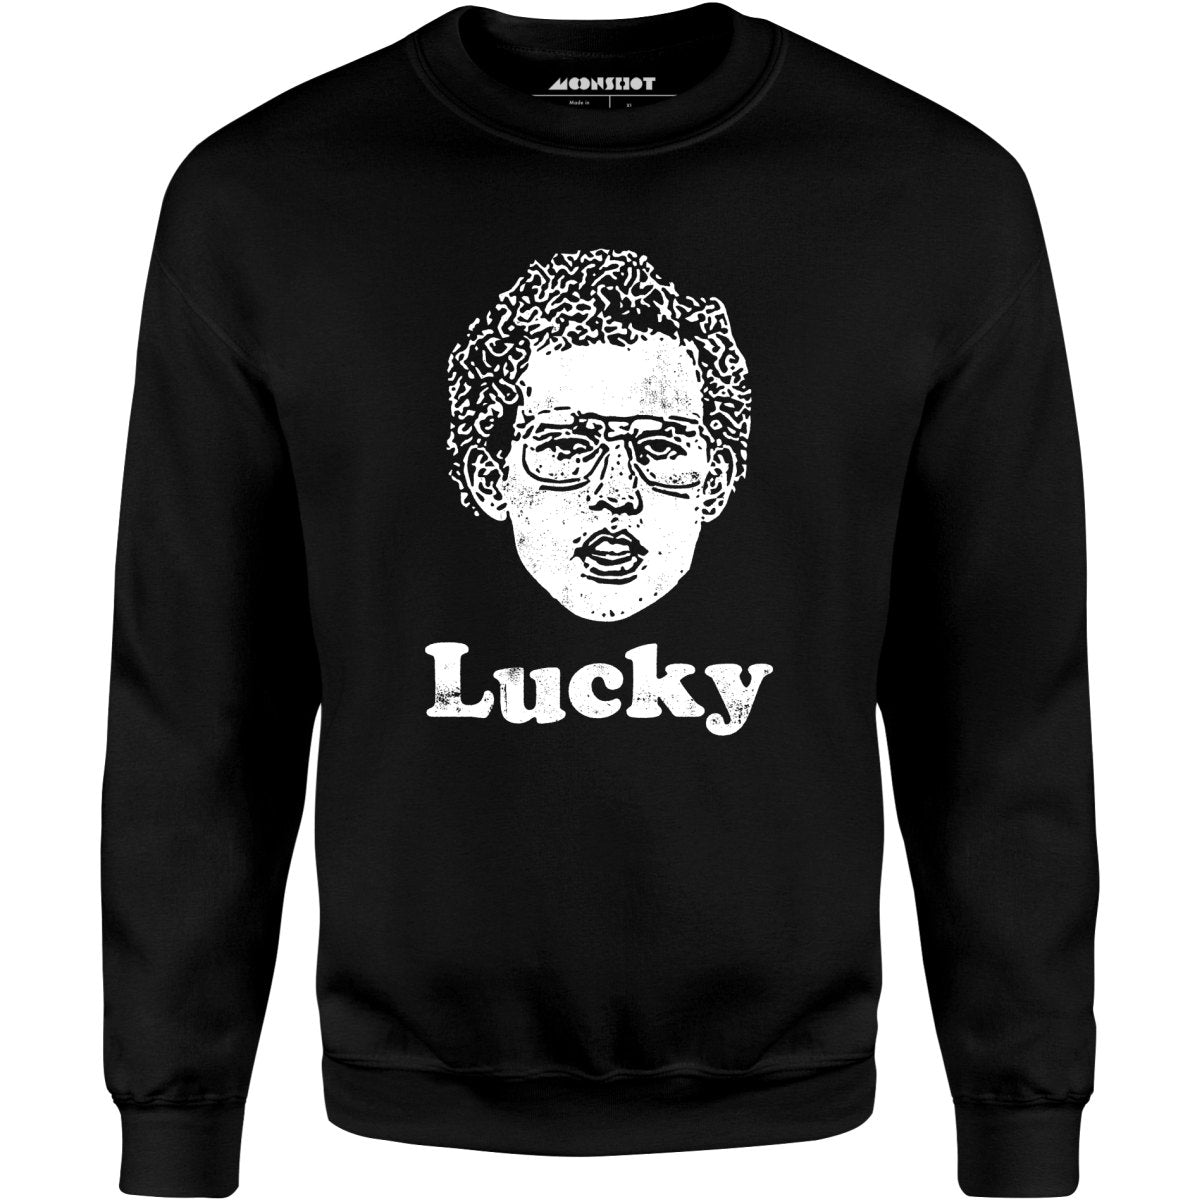 Lucky - Napoleon Dynamite - Unisex Sweatshirt